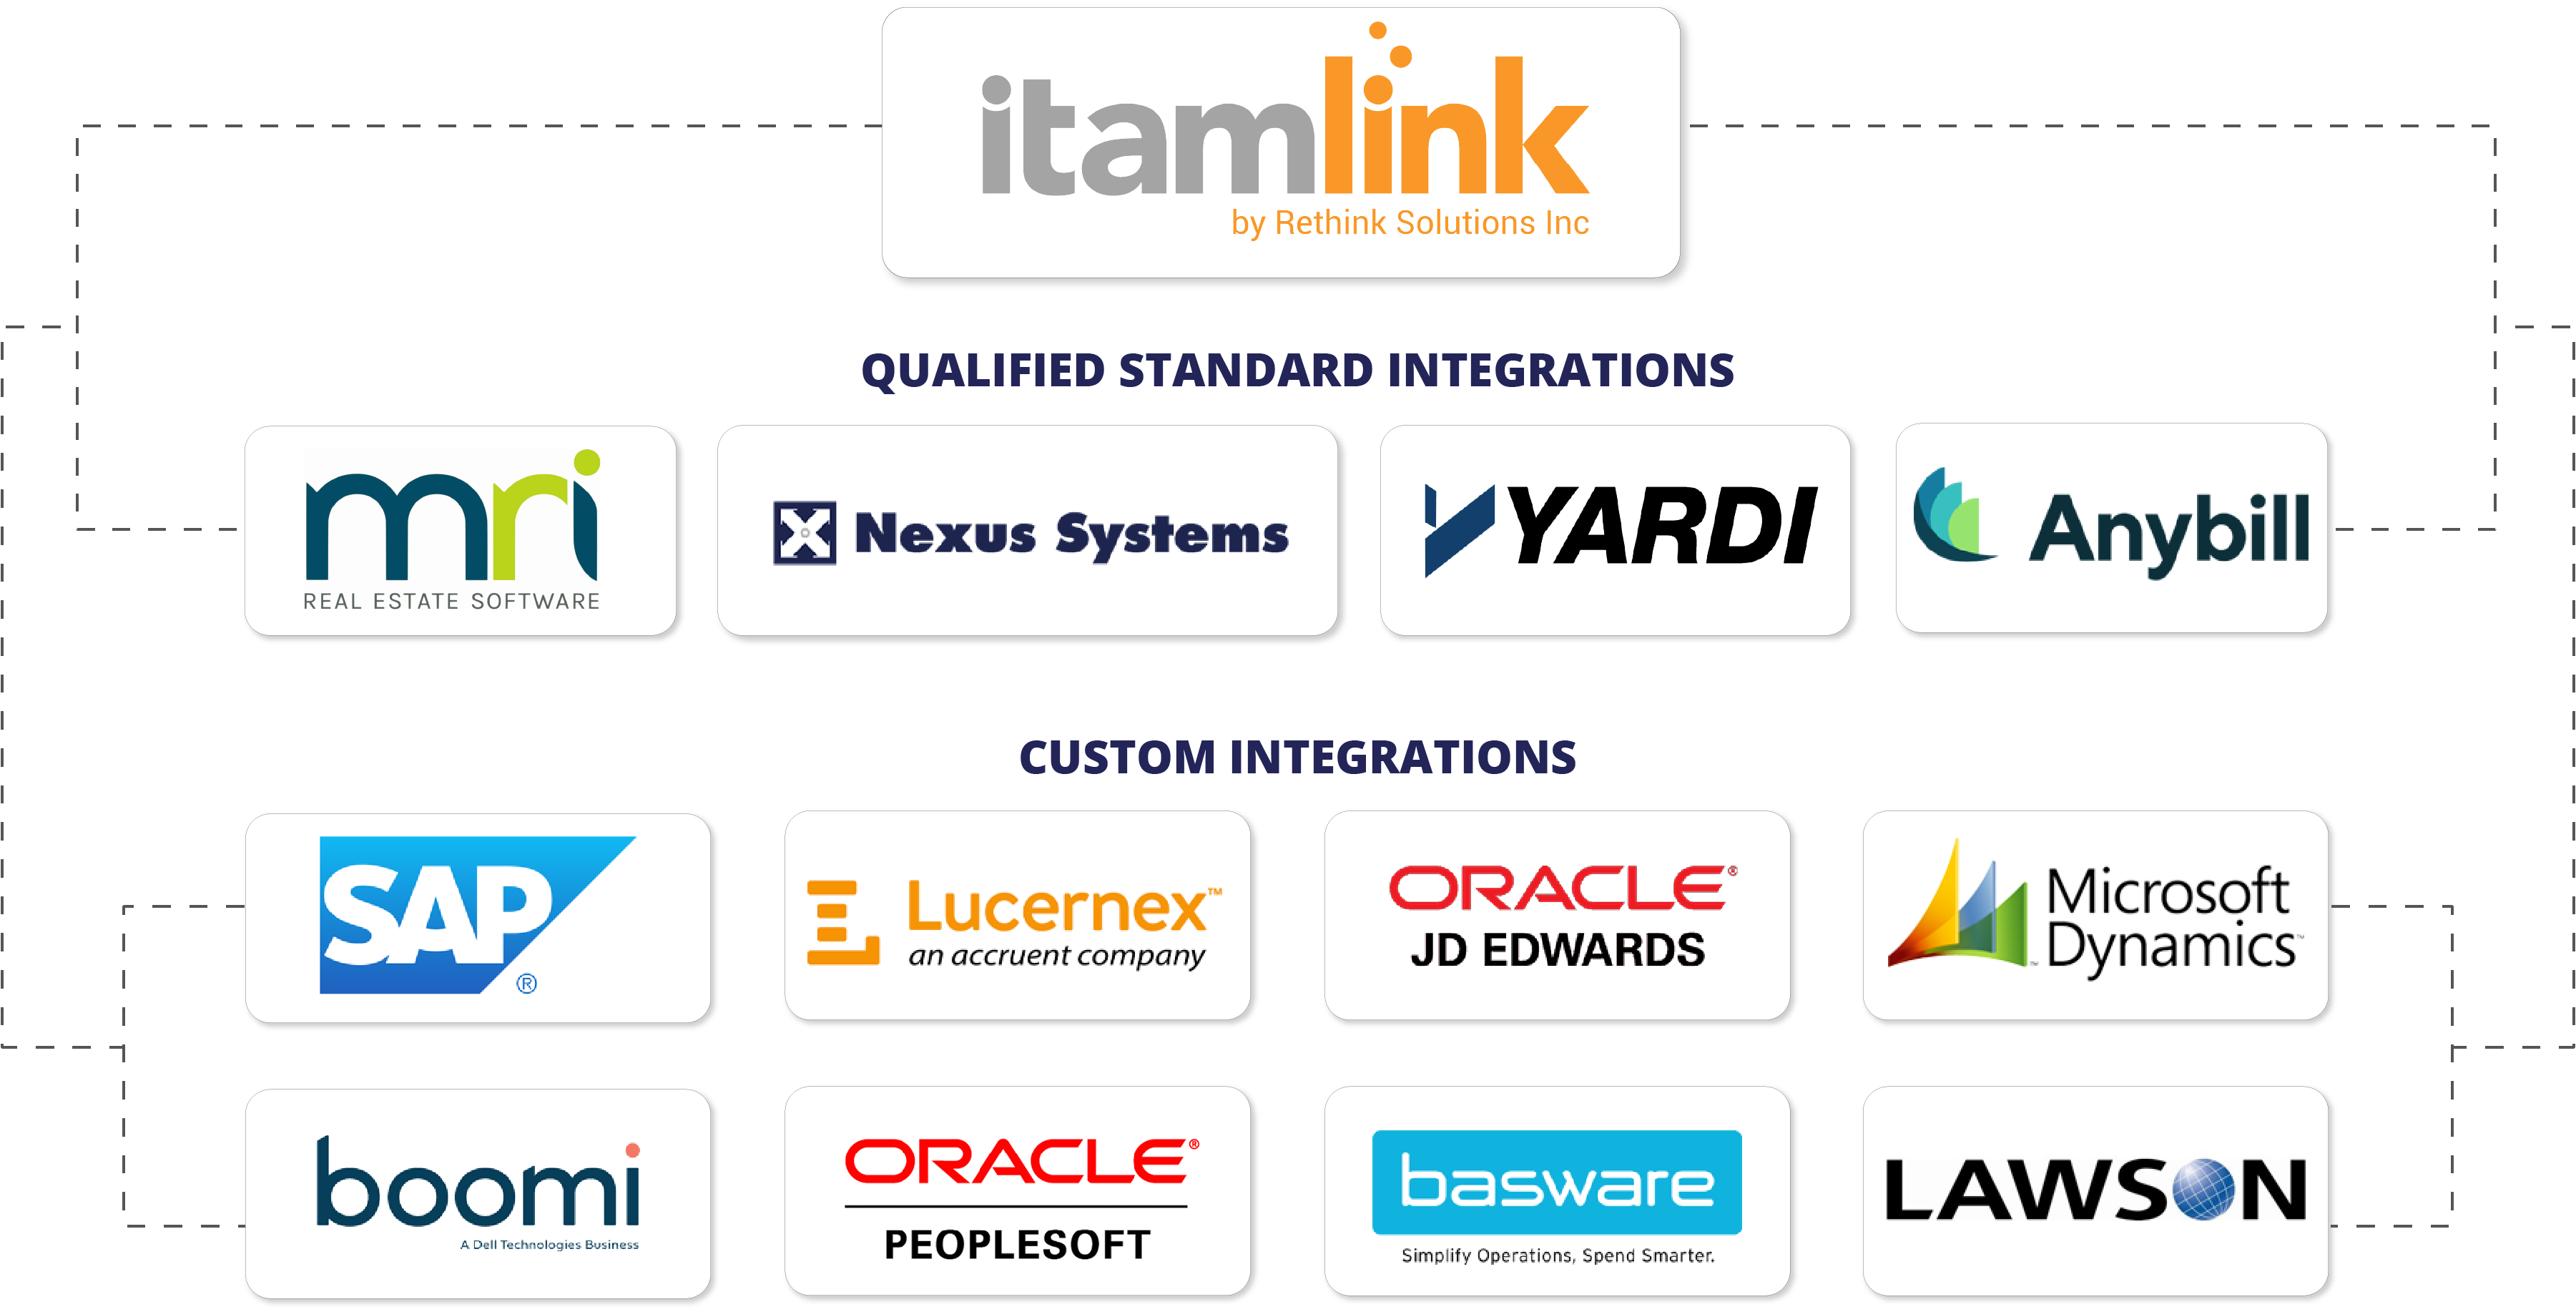 itamlink Qualified Standard Integrations + Custom Integrations